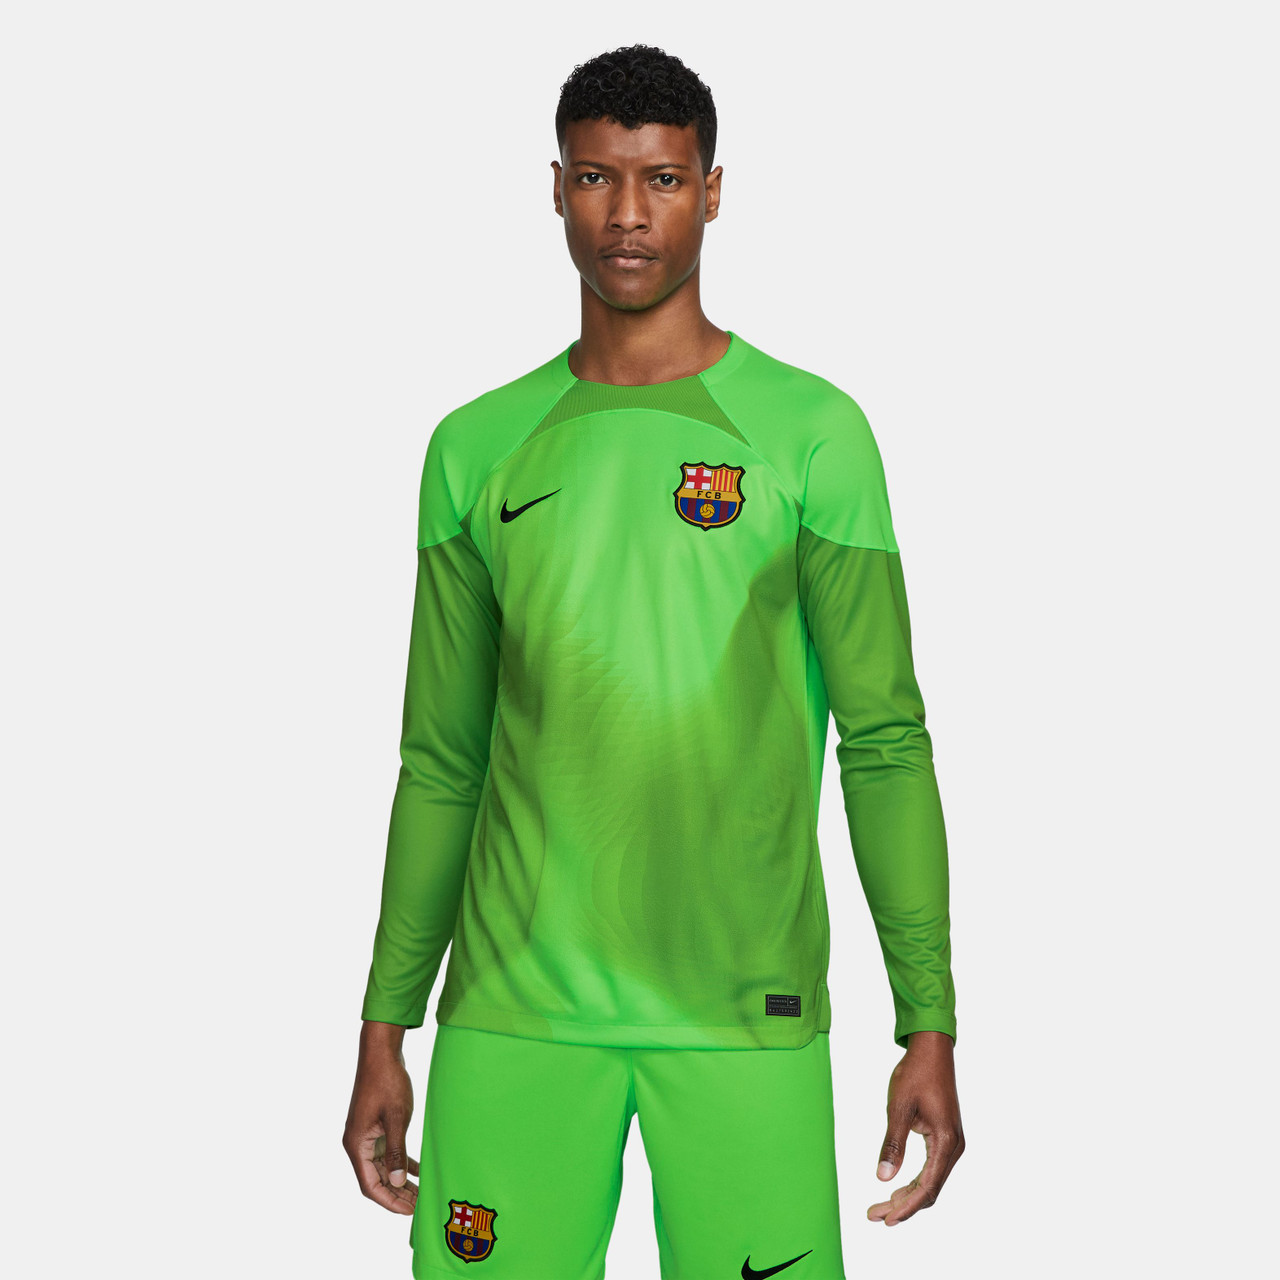 Men's Adidas Black La Galaxy 2023 Goalkeeper Long Sleeve Replica Jersey Size: Large